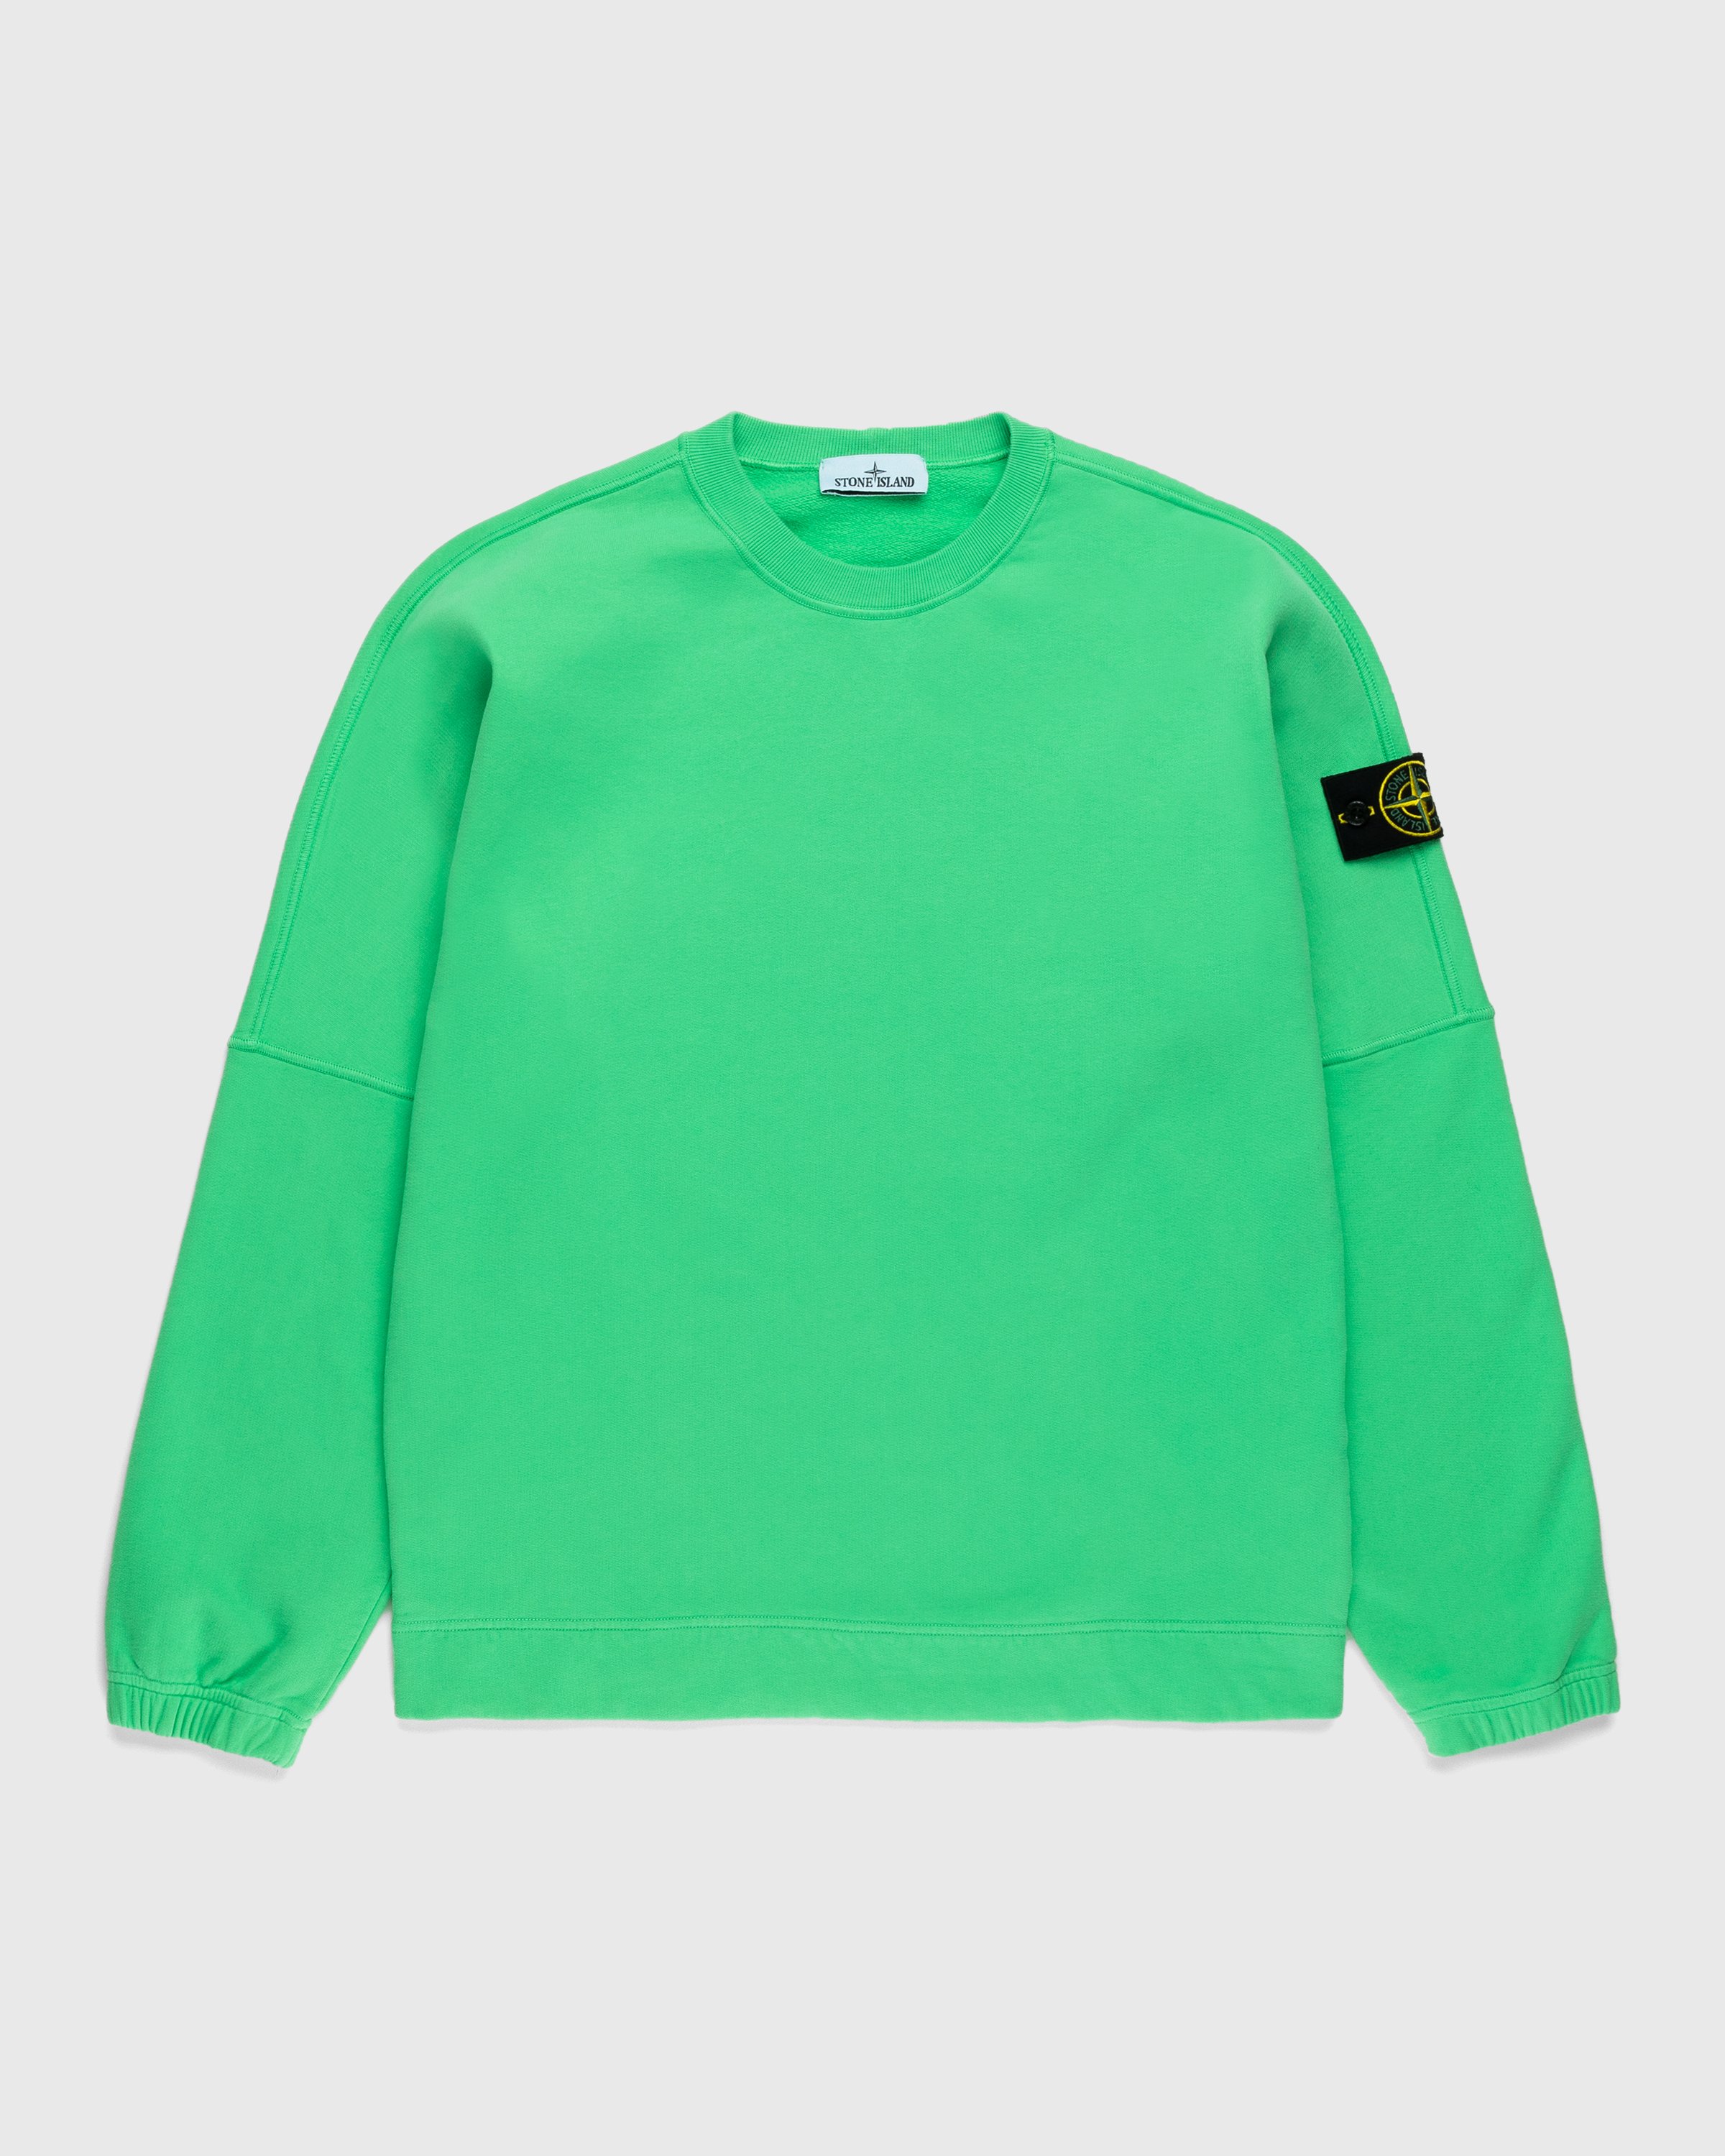 Stone Island - Garment-Dyed Fleece Crewneck Sweatshirt Light Green - Clothing - Green - Image 1